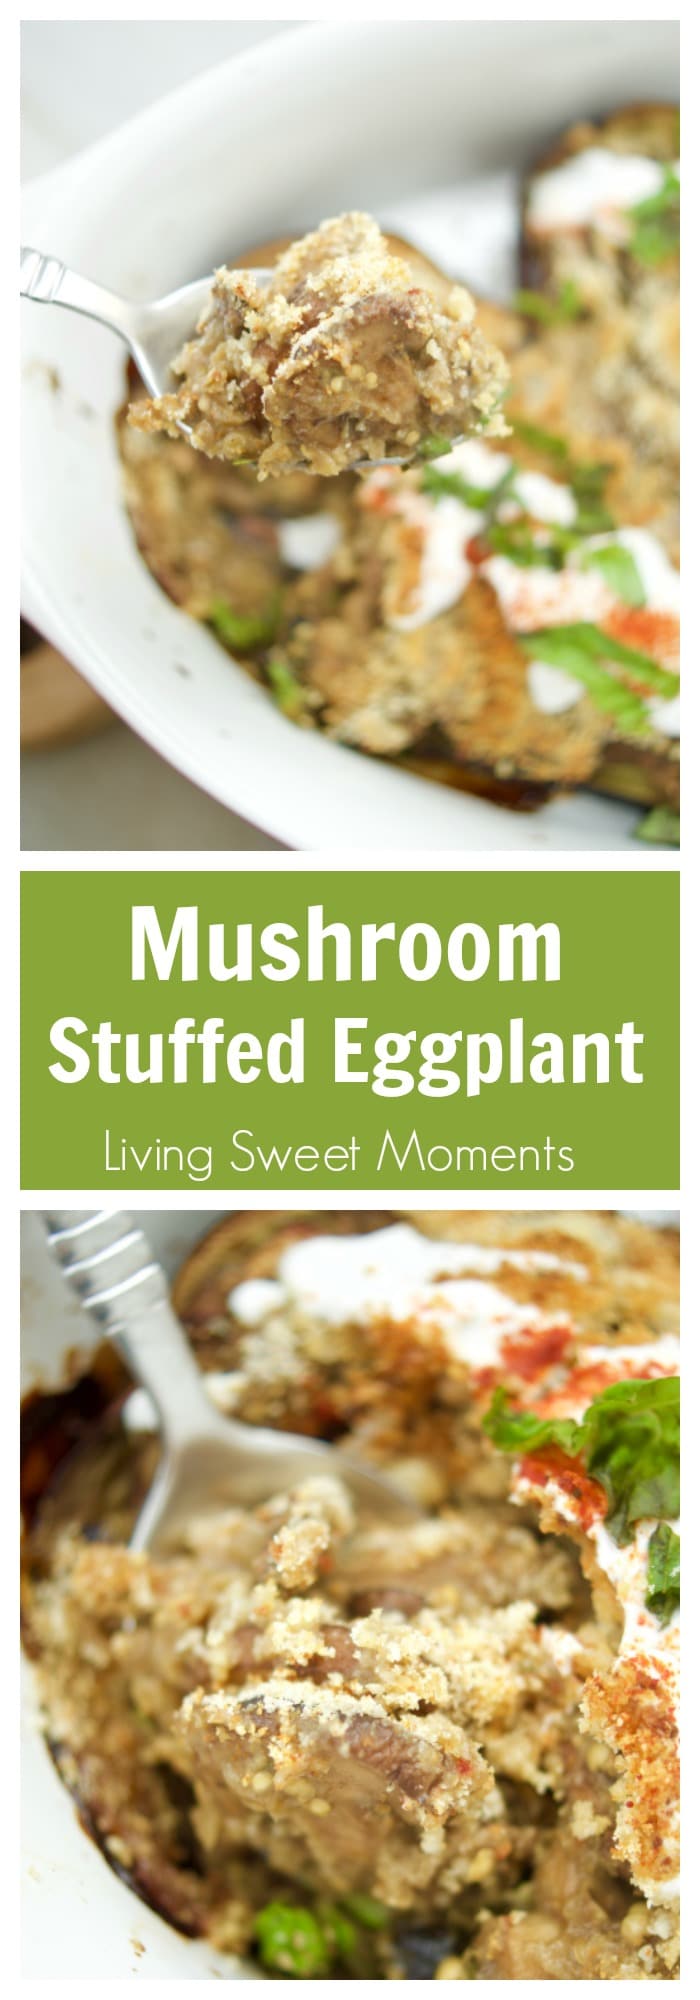 eggplant stuffed with mushrooms recipe cover